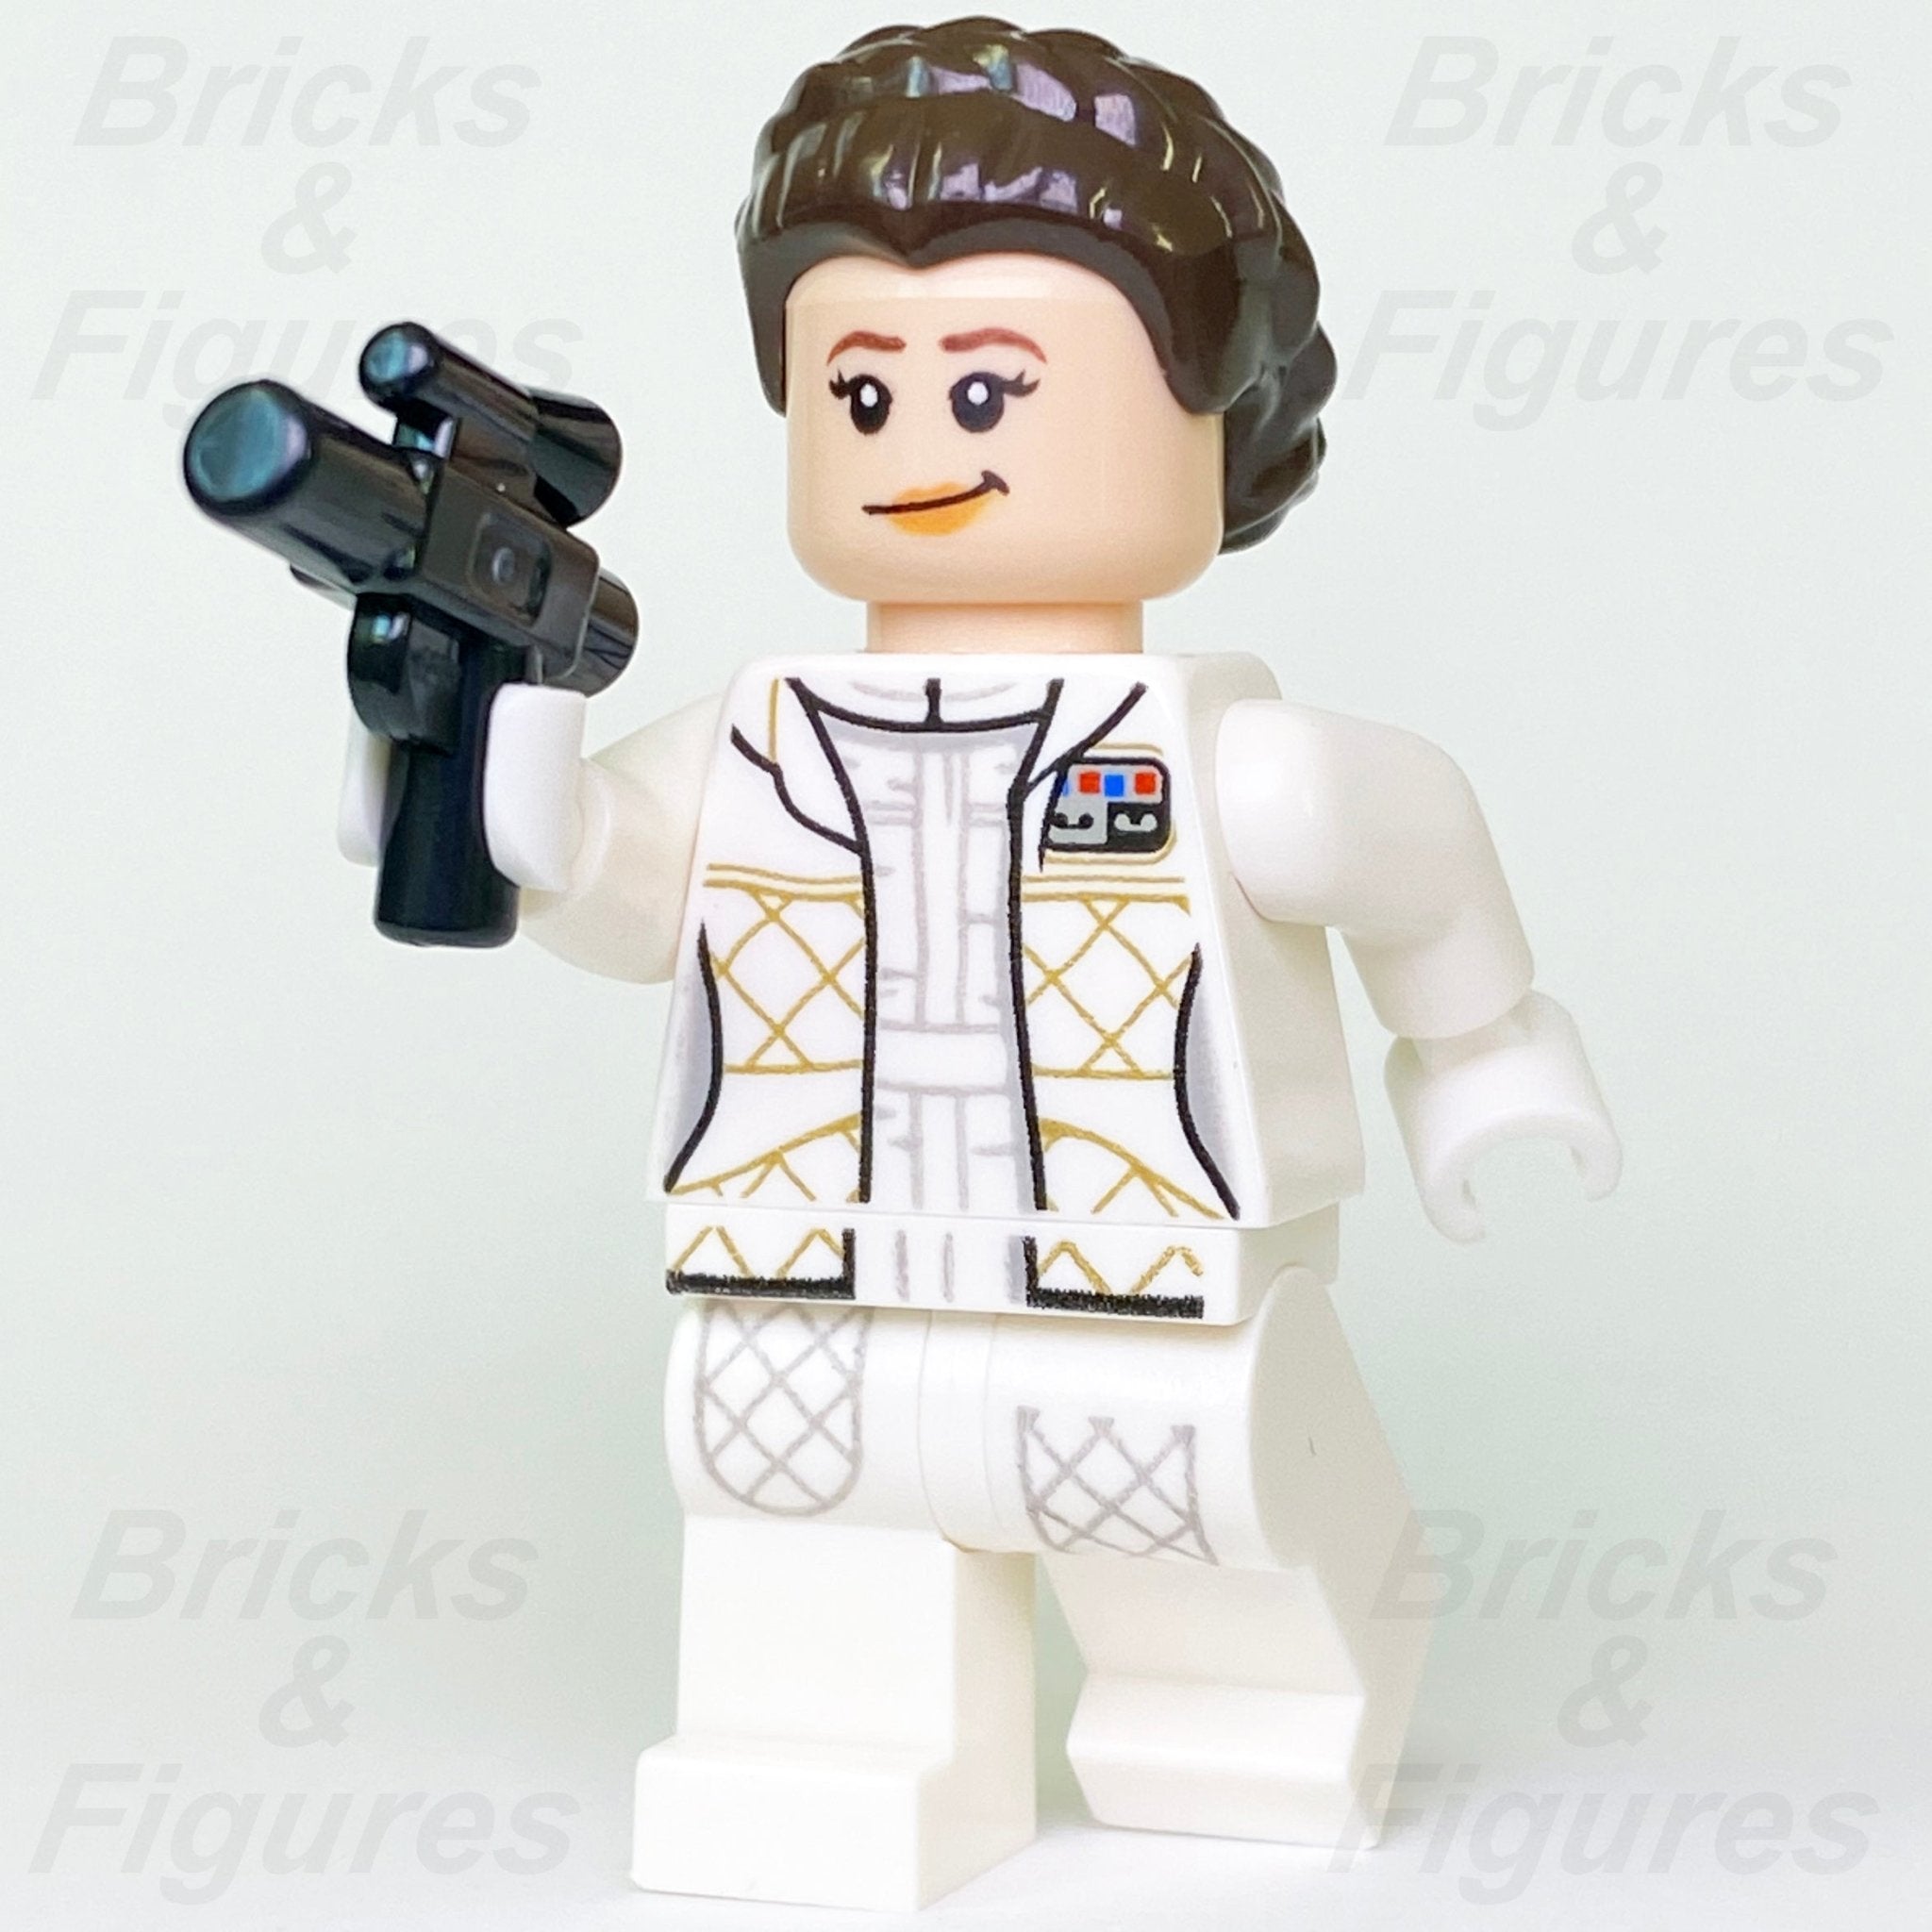 LEGO Princess Leia Minifigures